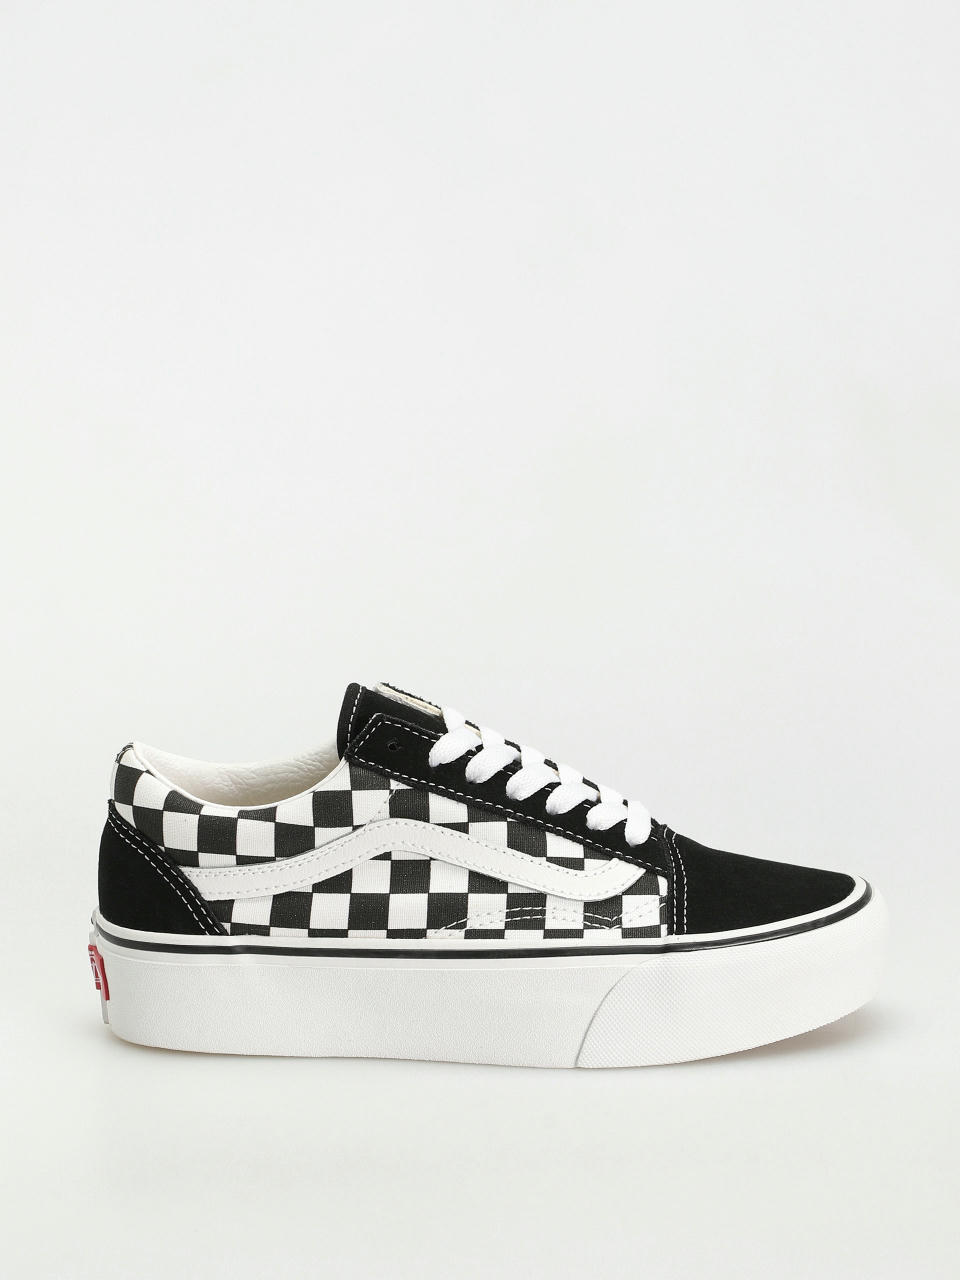 Обувки Vans Old Skool Platform (checkerboard black/true white)